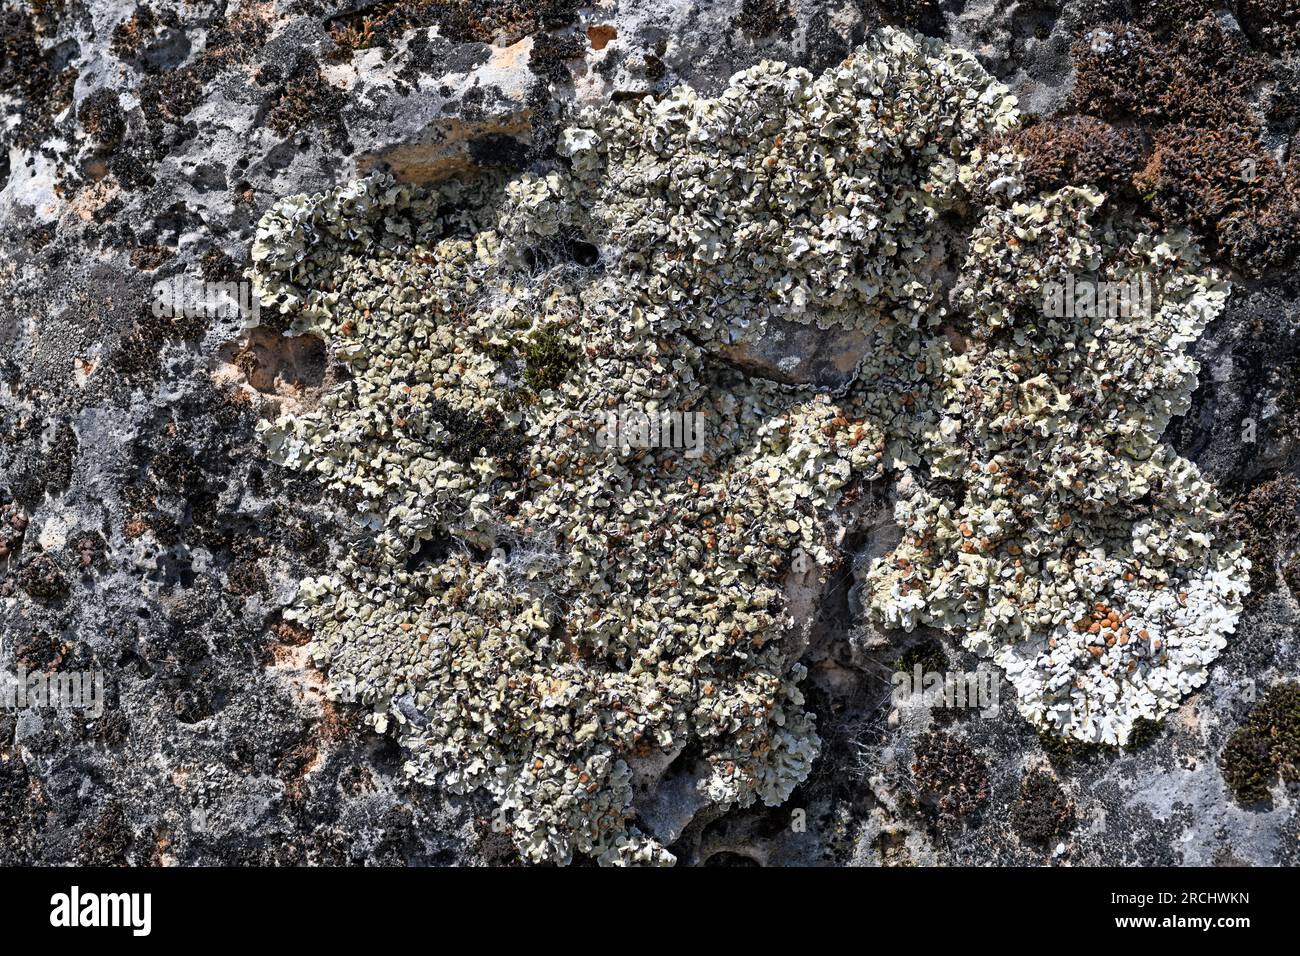 Squamarina cartilaginea is a squamulose lichen that grows on calcareous rocks. This photo was taken in Serranía de Cuenca, Castilla-La Mancha, Spain. Stock Photo